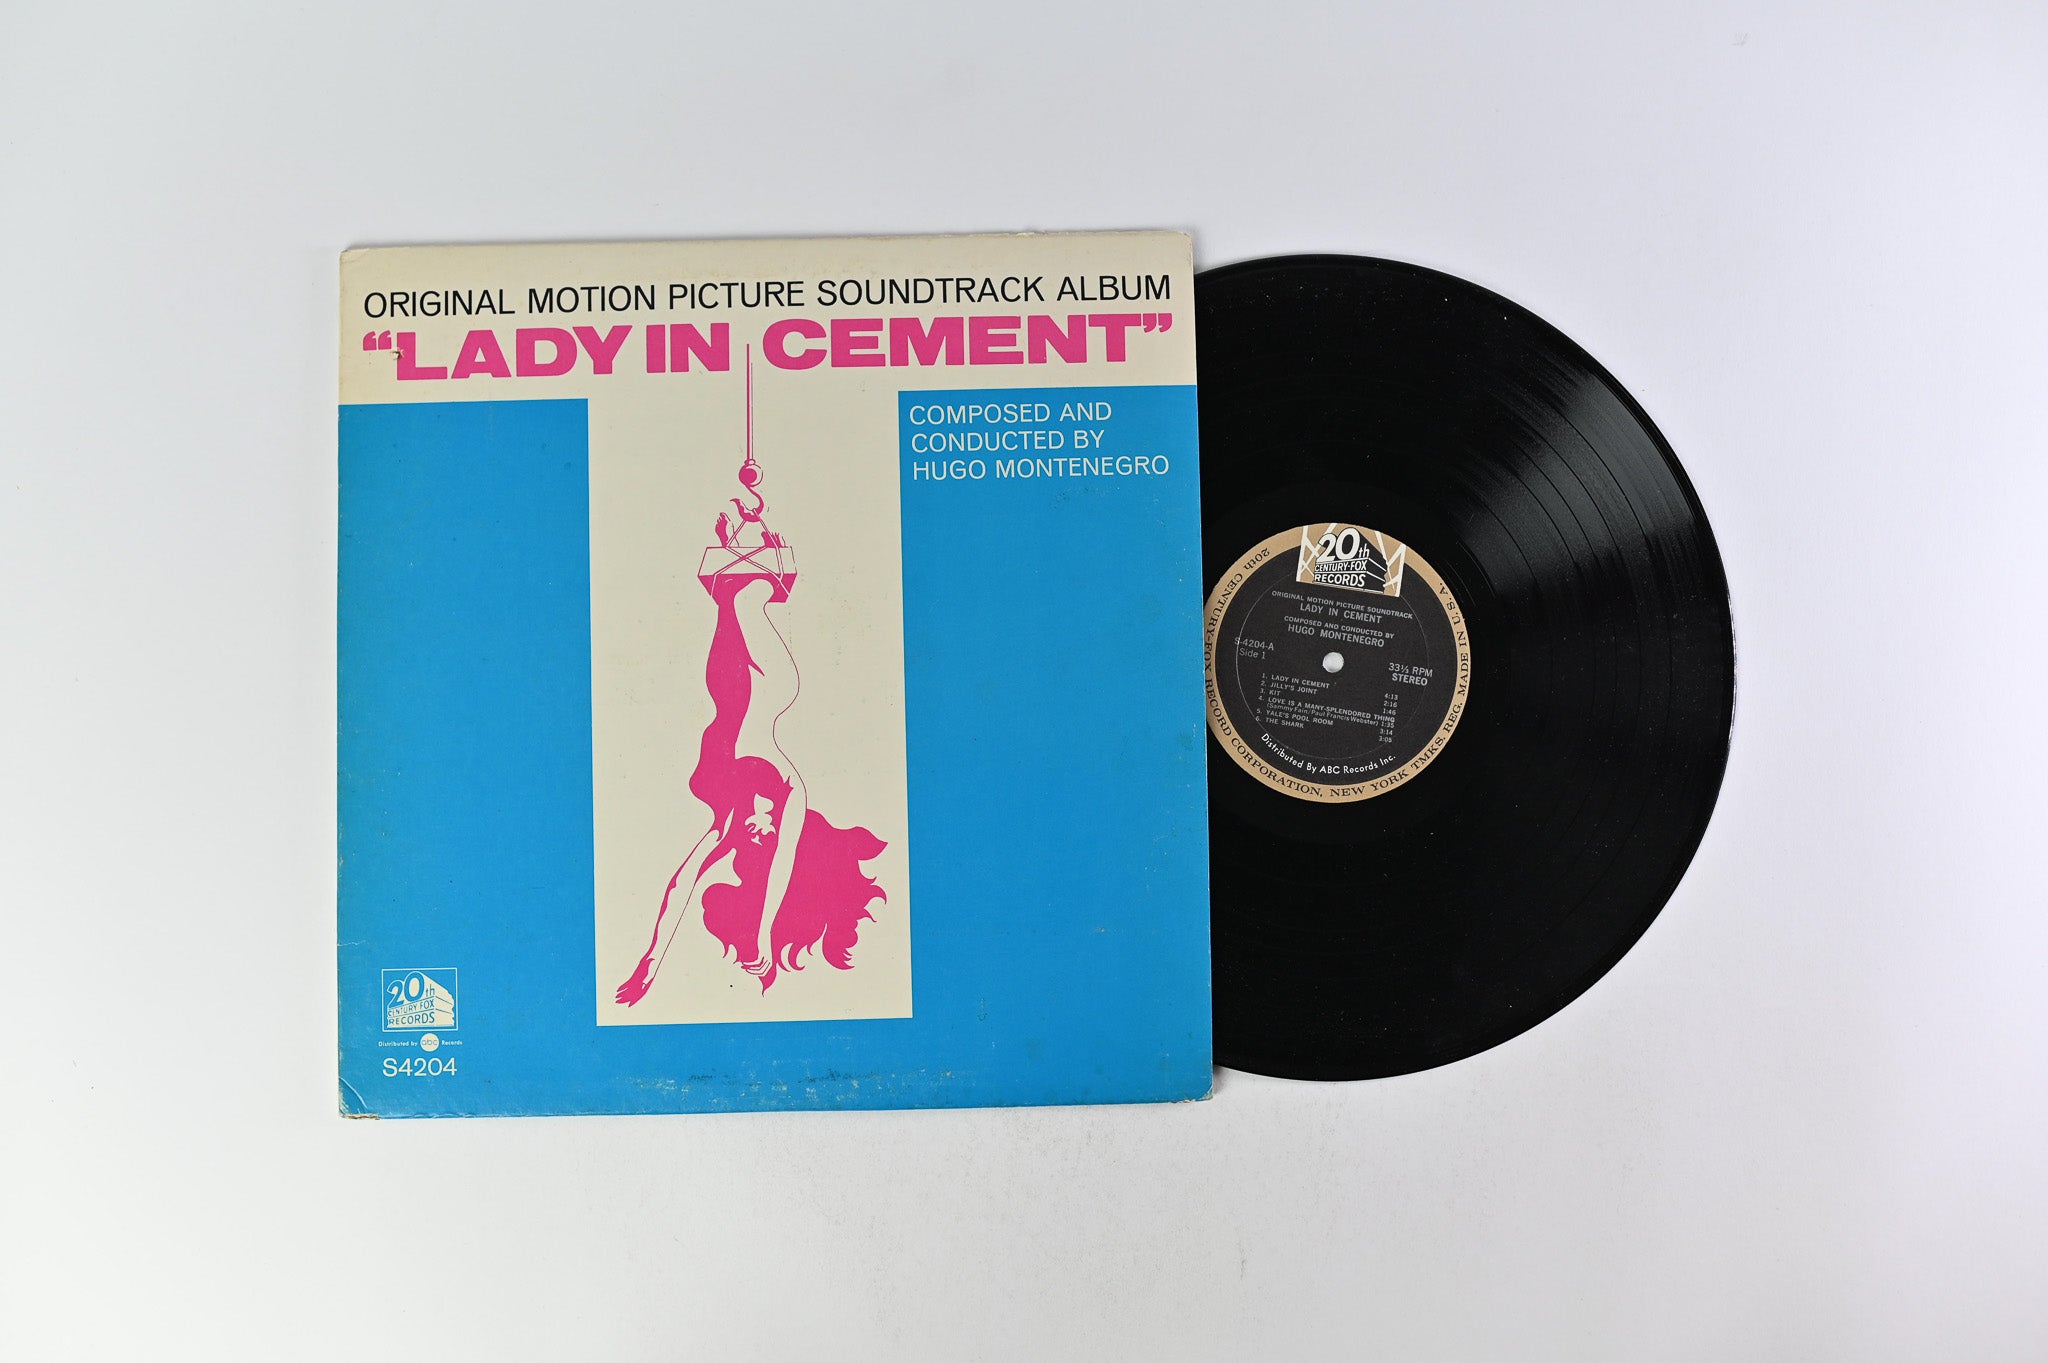 Hugo Montenegro – Lady In Cement (Original Motion Picture Soundtrack Album) on 20th Century Fox Records